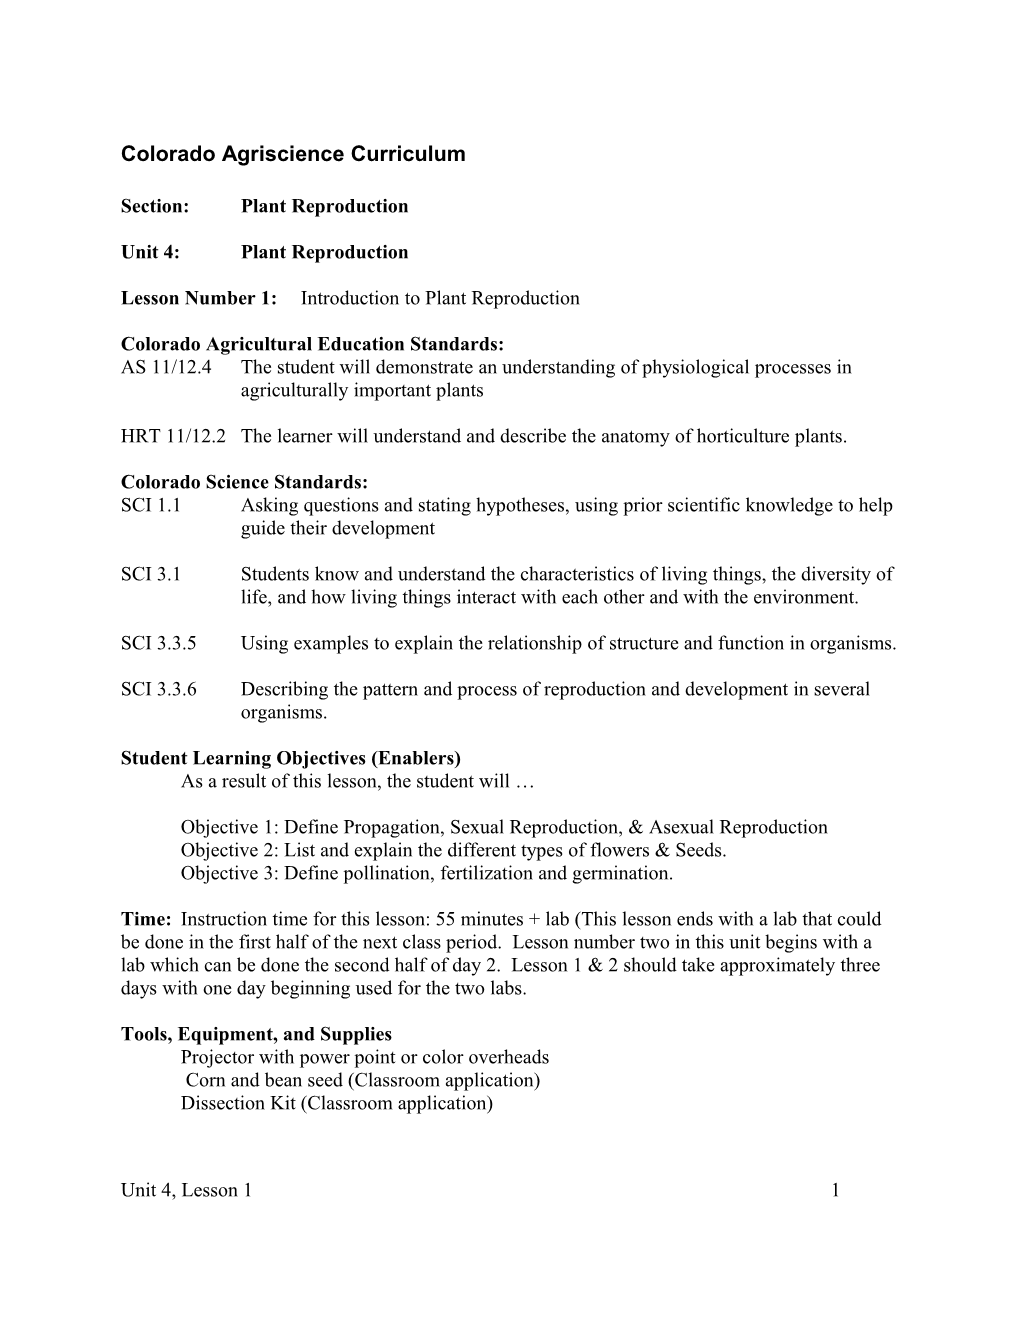 Colorado Agriscience Curriculum s4